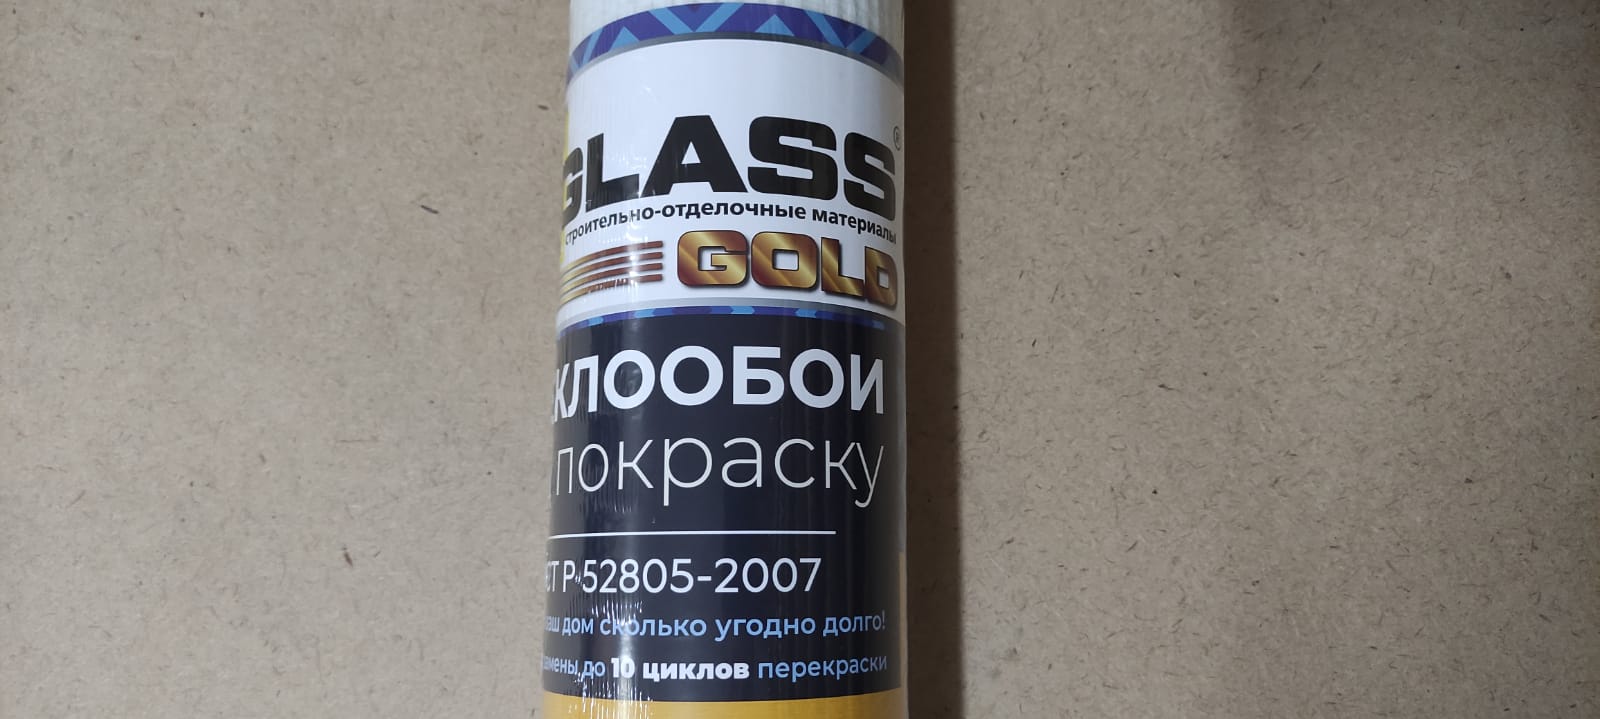 Стеклообои X-Glass GOLD рогожка средняя (25 м)